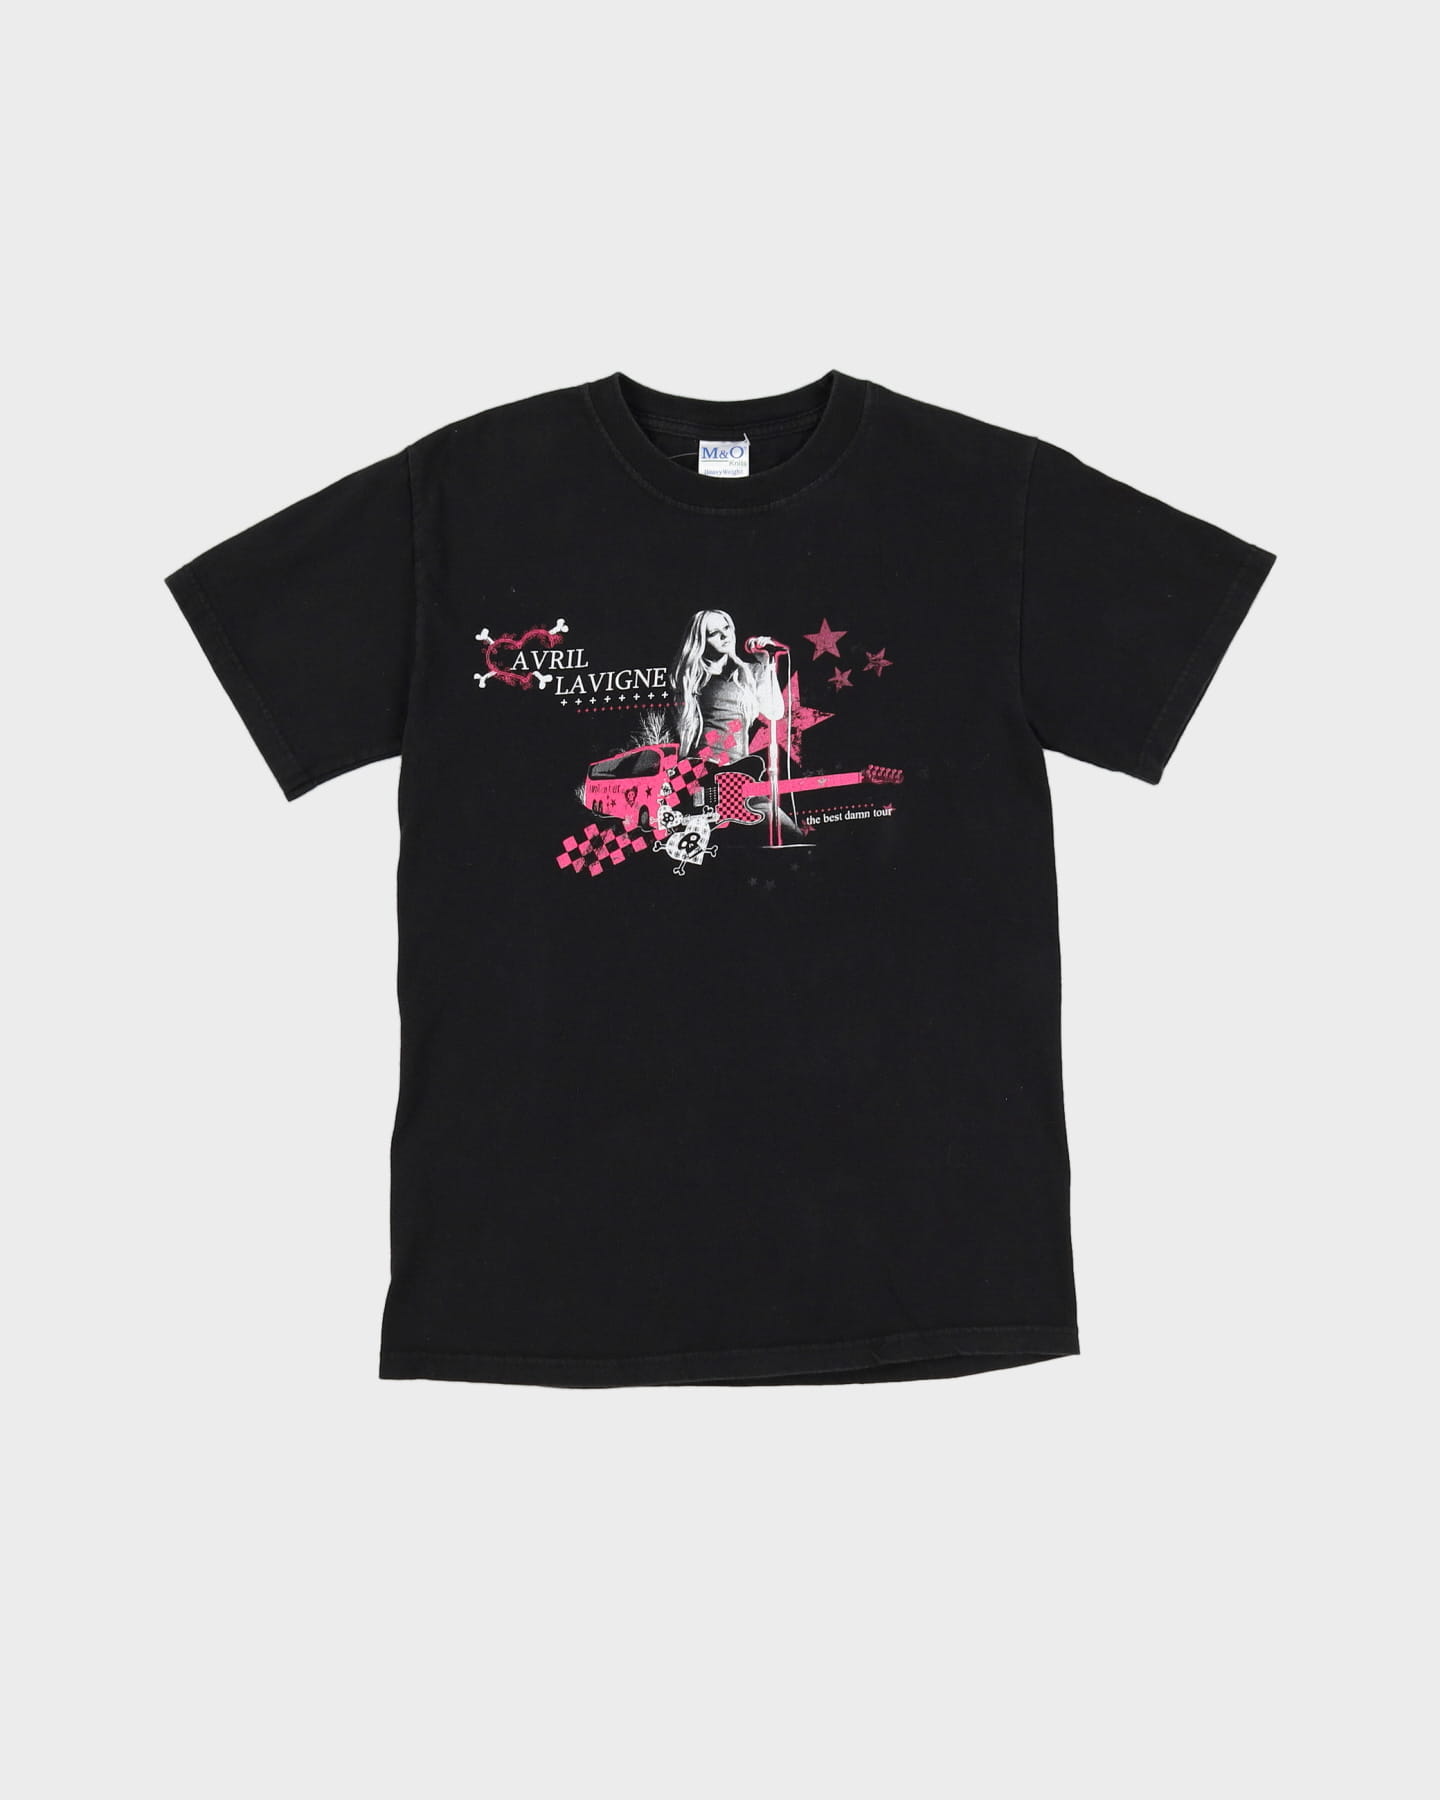 Avril Lavigne The Best Damn Tour Black Graphic Band T Shirt - S